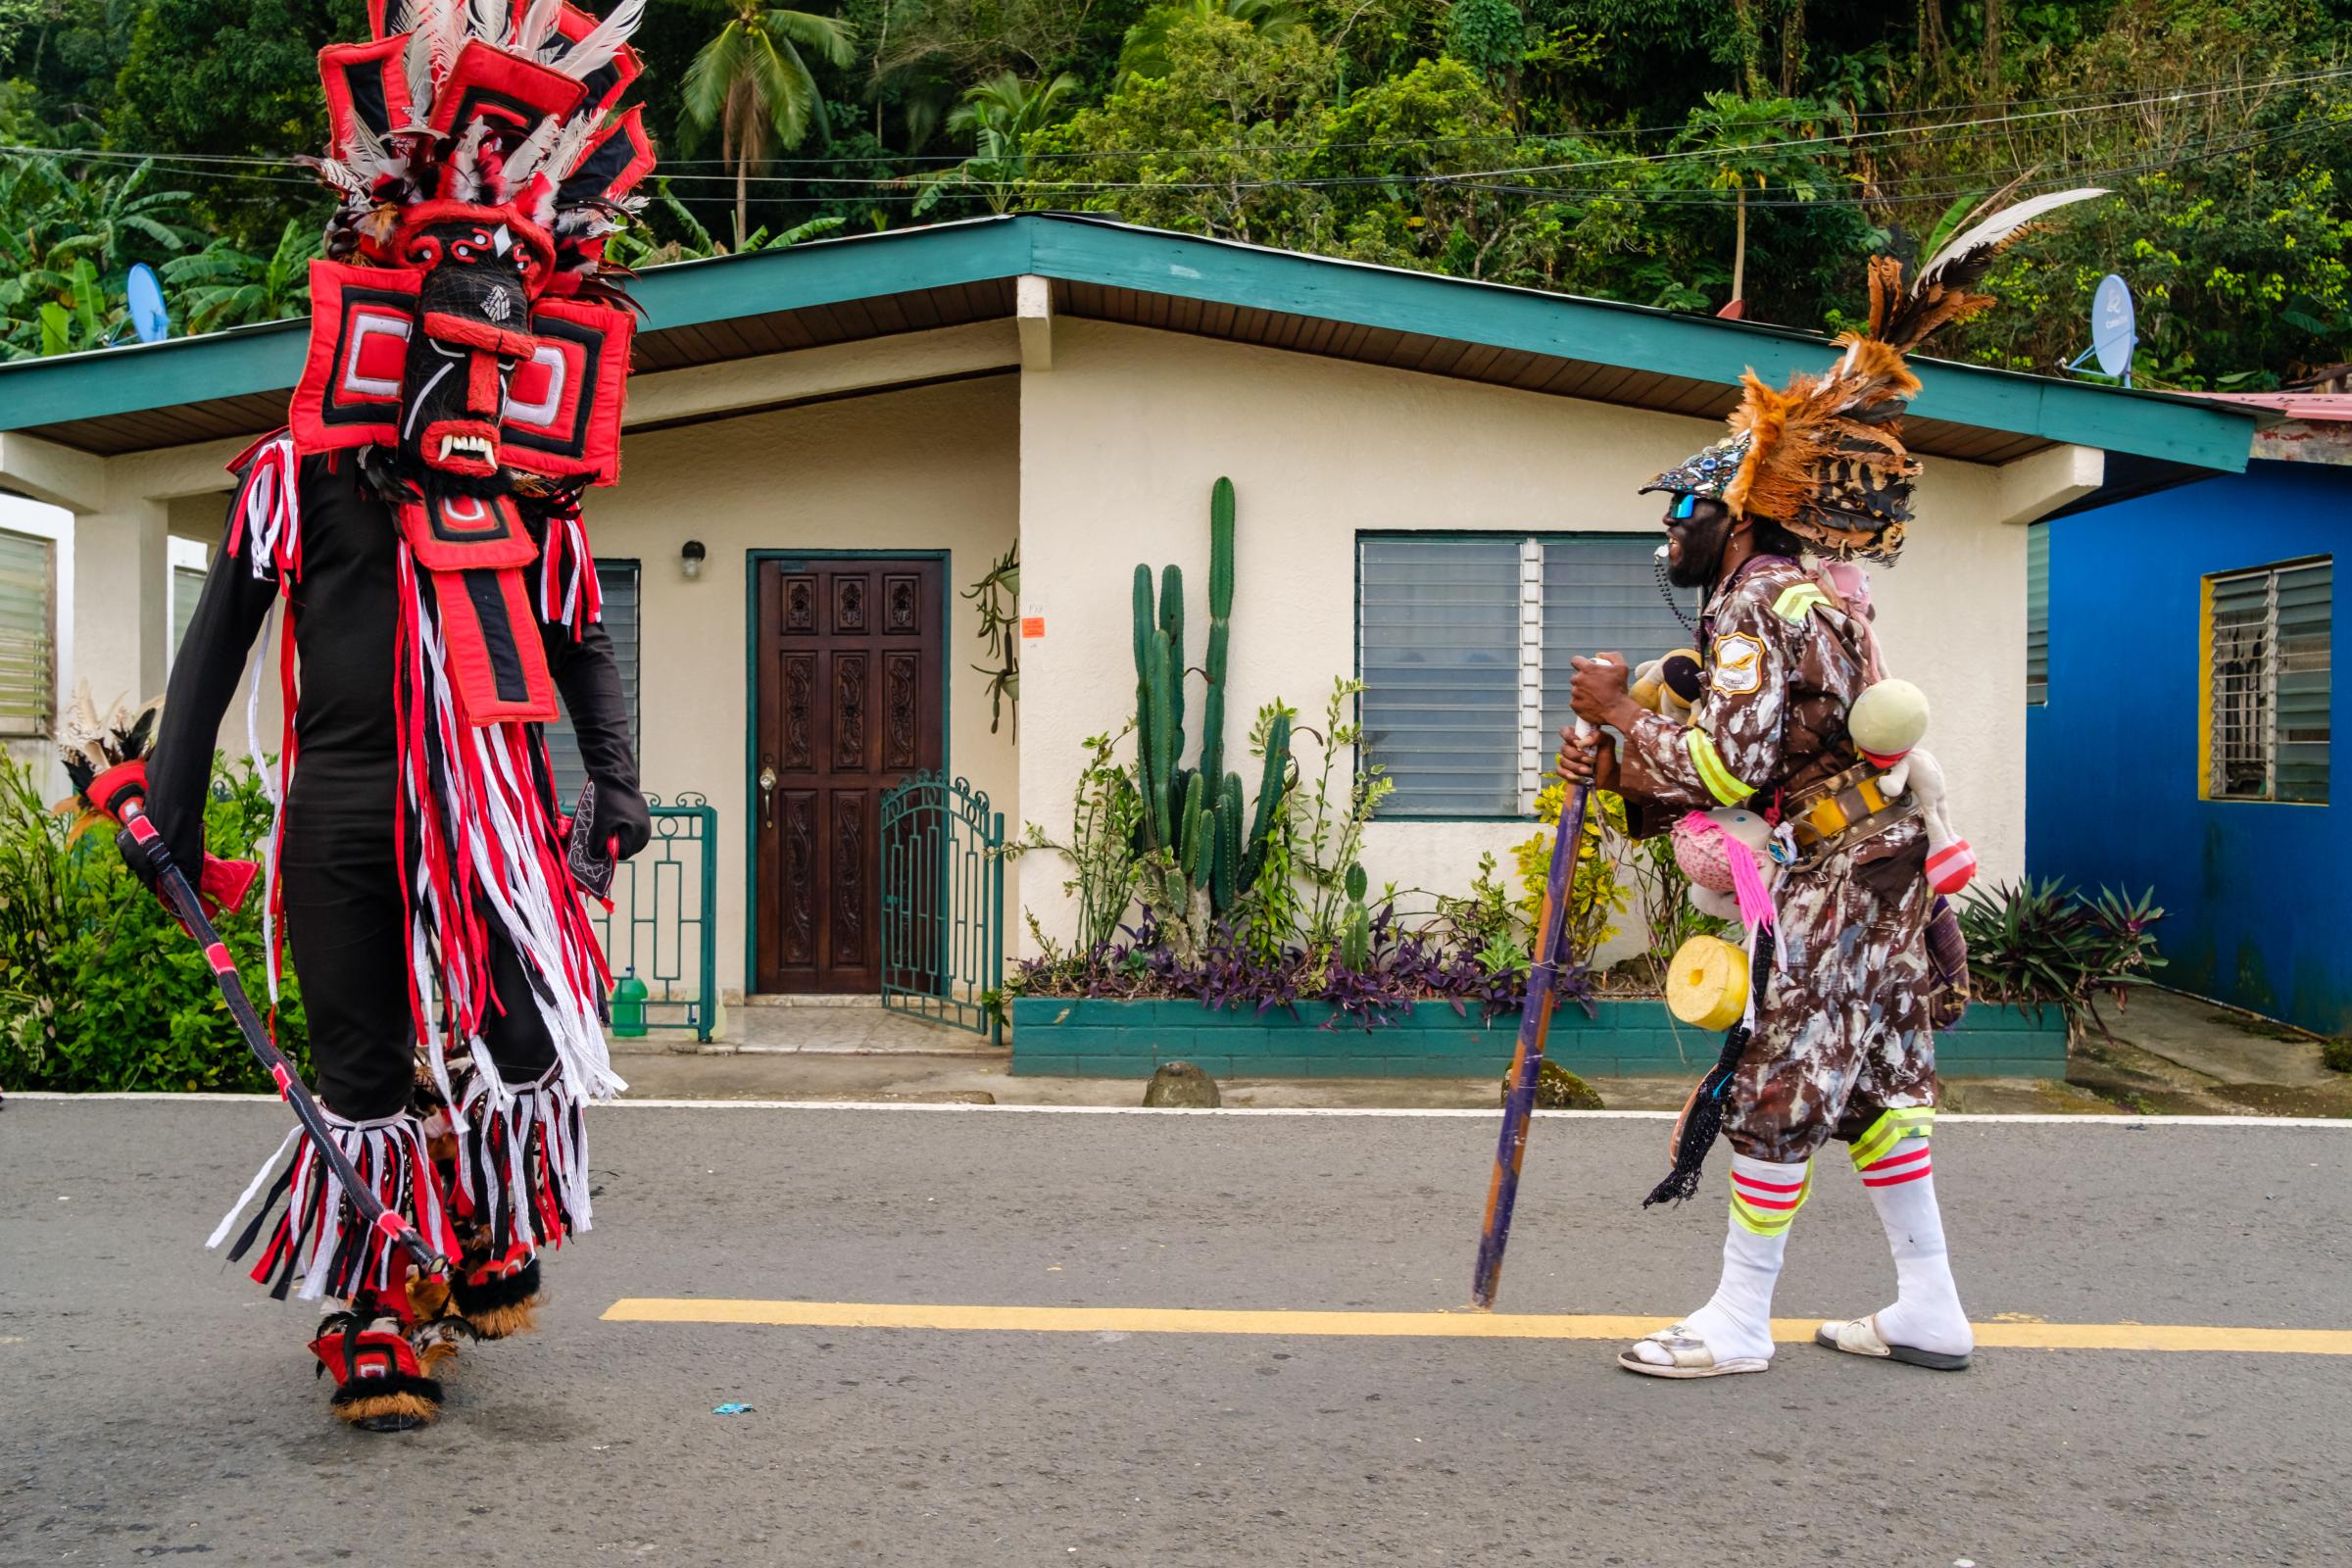 Congo Culture, Portobelo, Panama - Congo traditions in Panama celebrate the resistance...